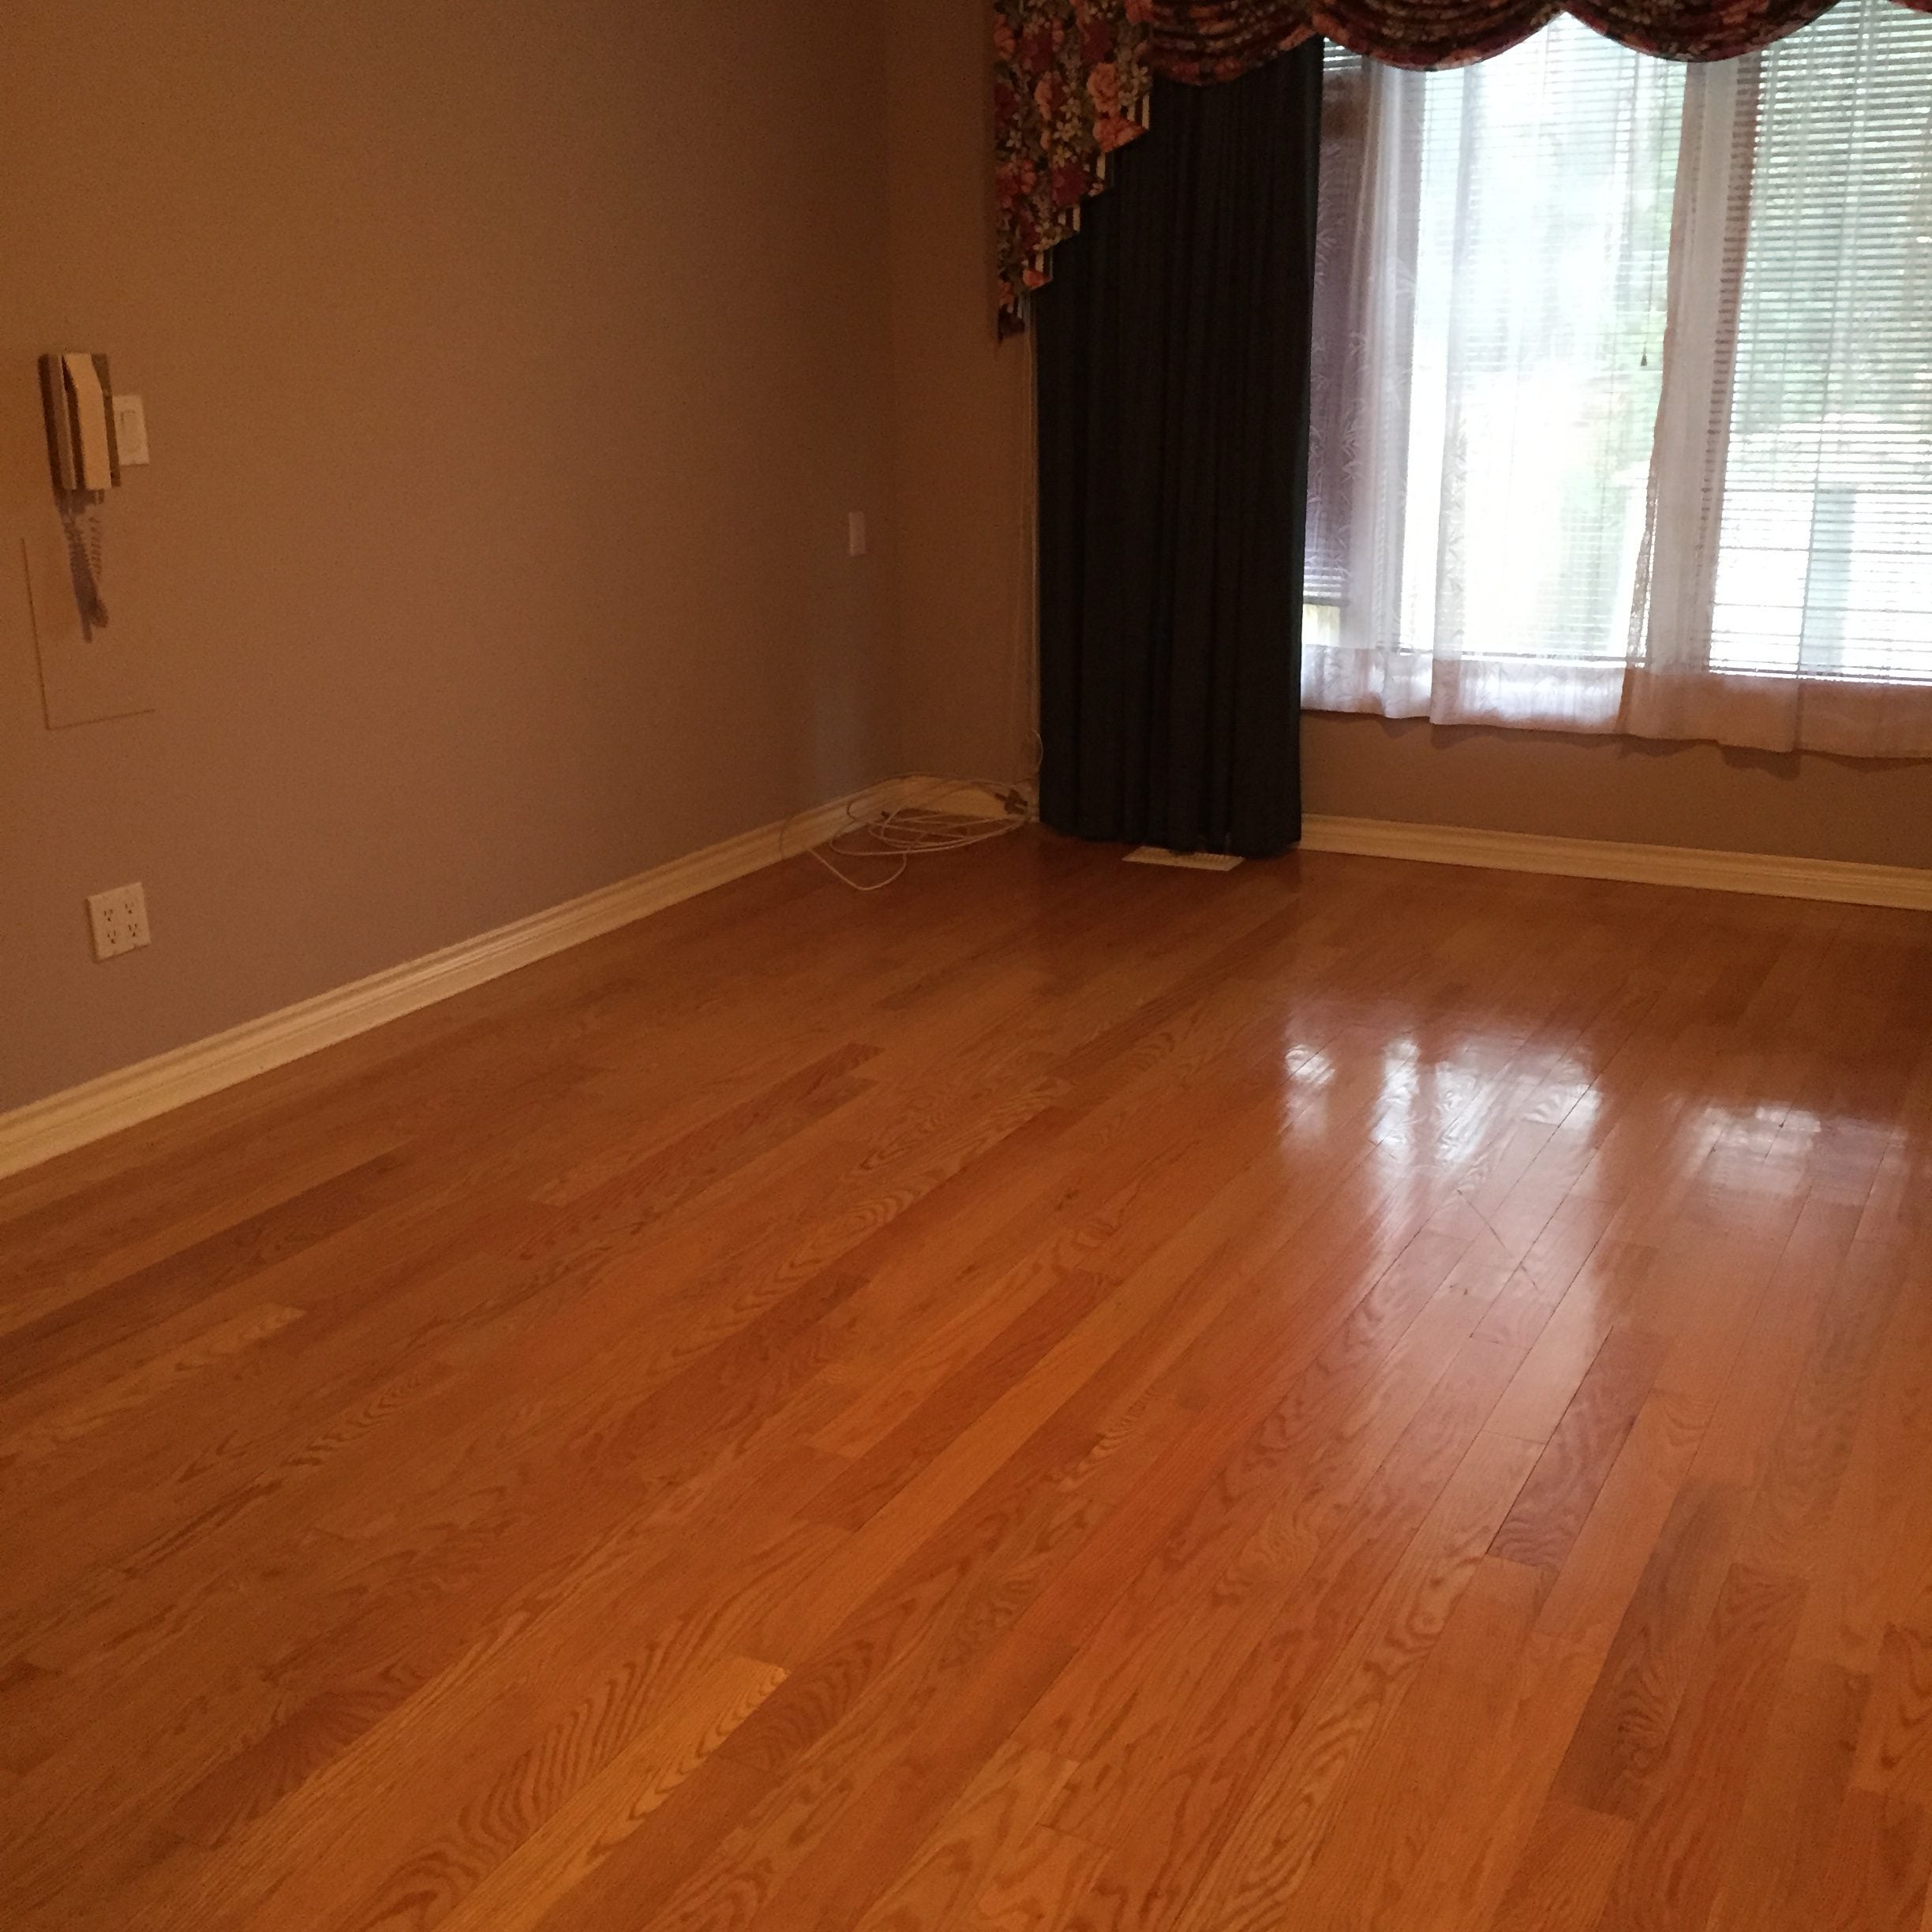 How Much To Refinish Hardwood Floor, Hardwood Floor Refinishing Cost Calgary